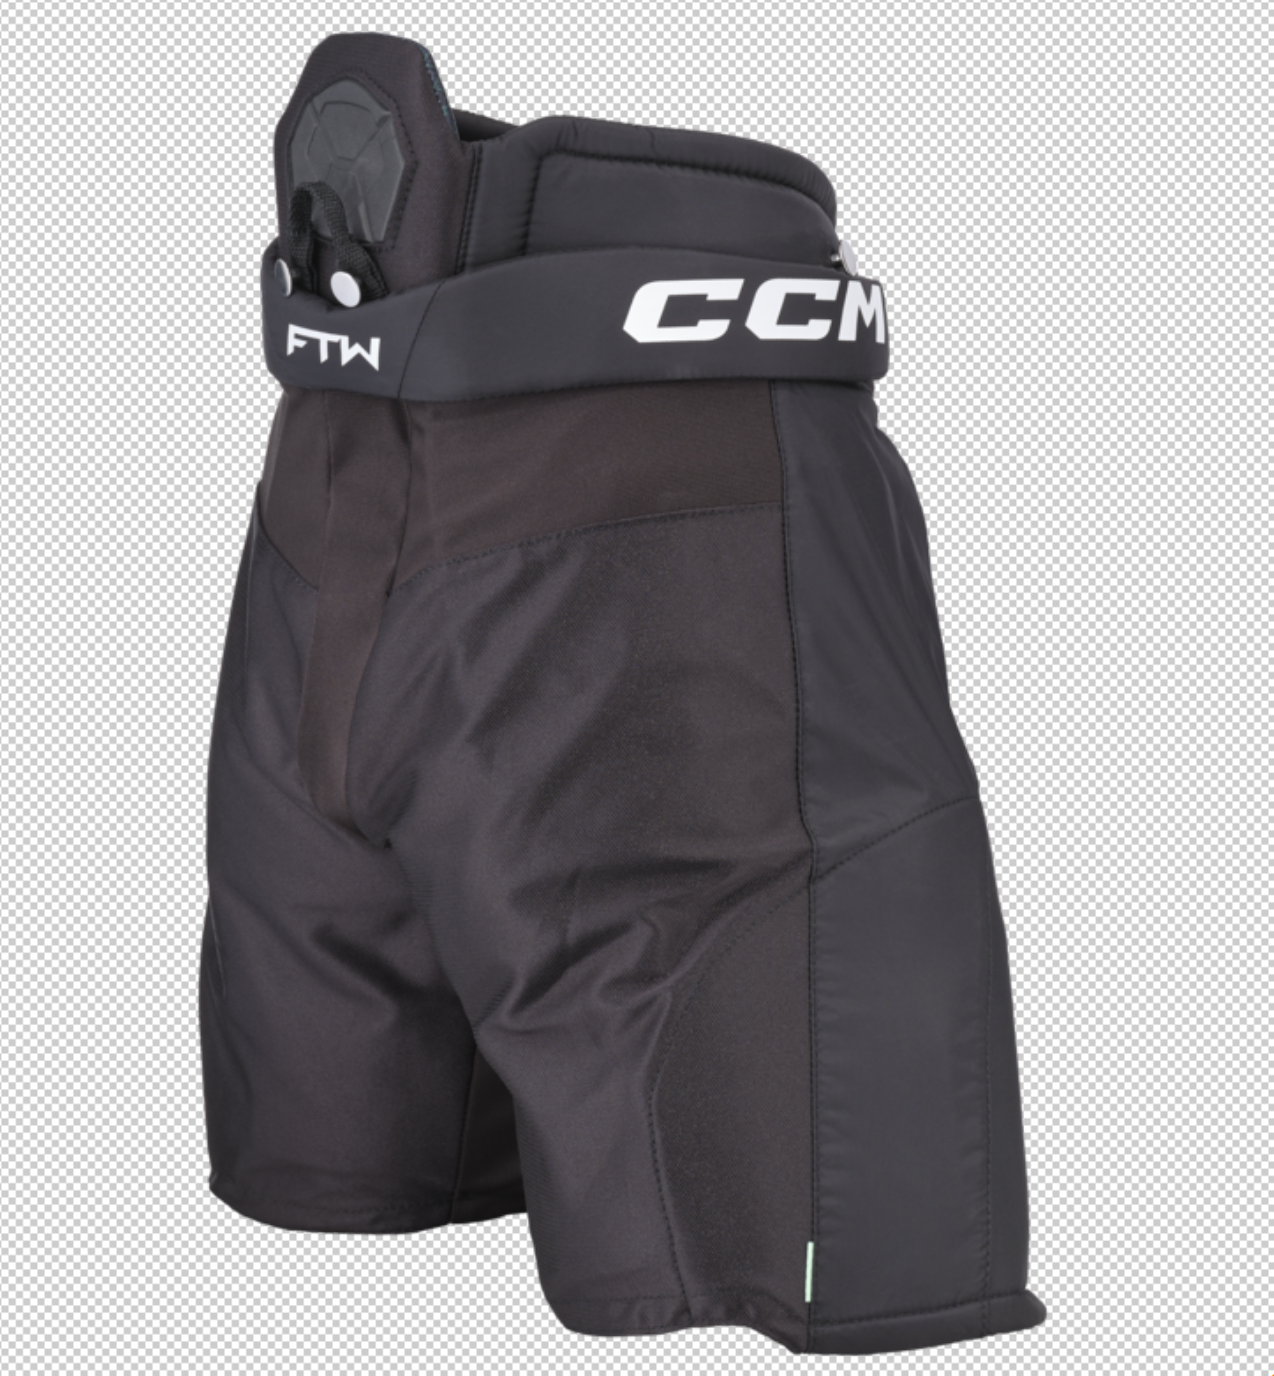 CCM Jetspeed FTW Hockey Pants Senior